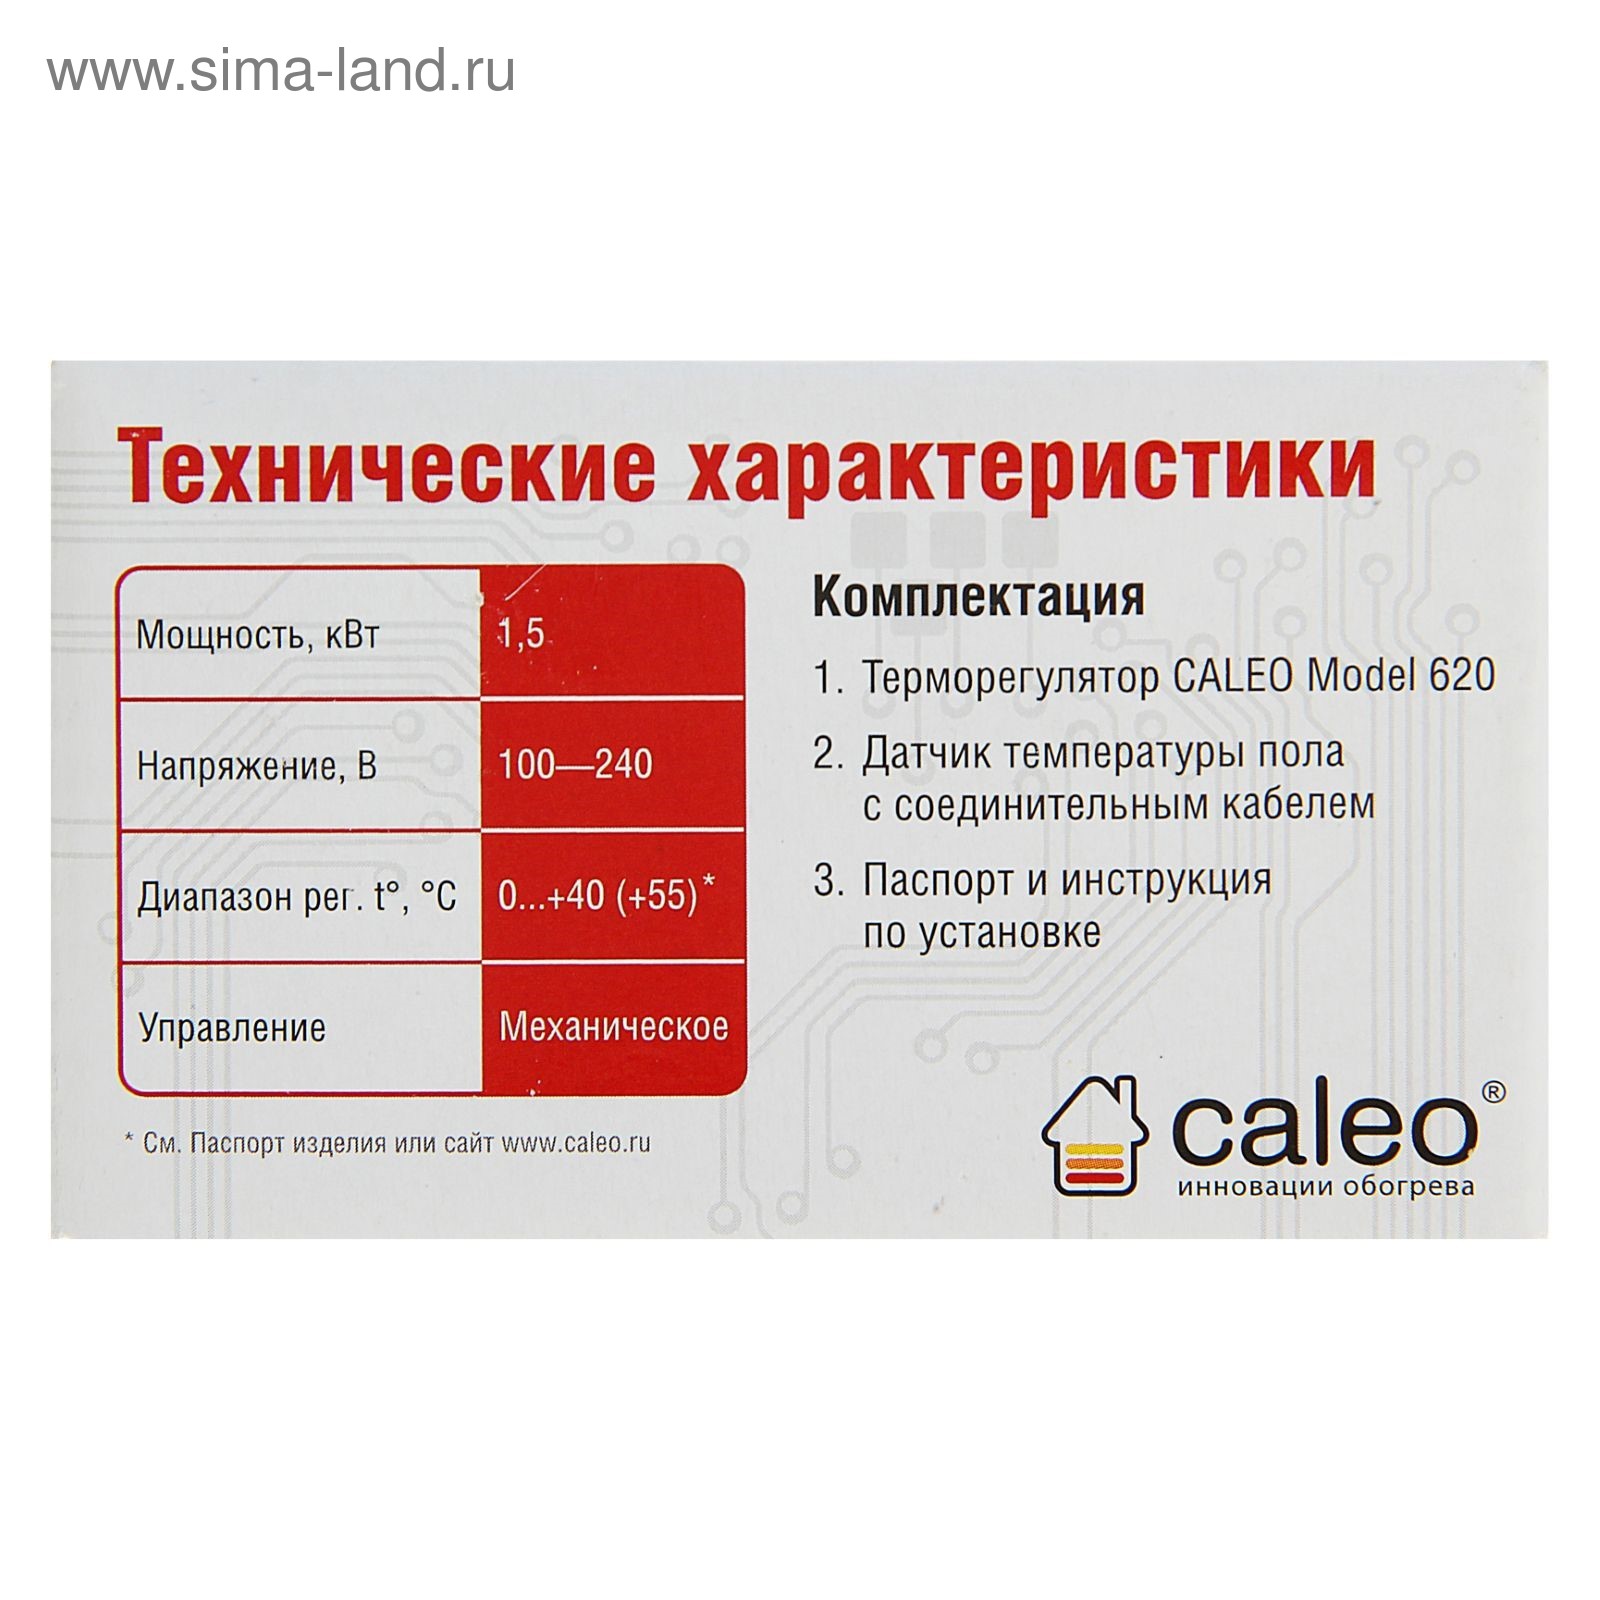 Терморегулятор Caleo 620. Терморегулятор механический 620 Caleo 3.5 КВТ. Caleo model 620. Caleo 620 терморегулятор инструкция.